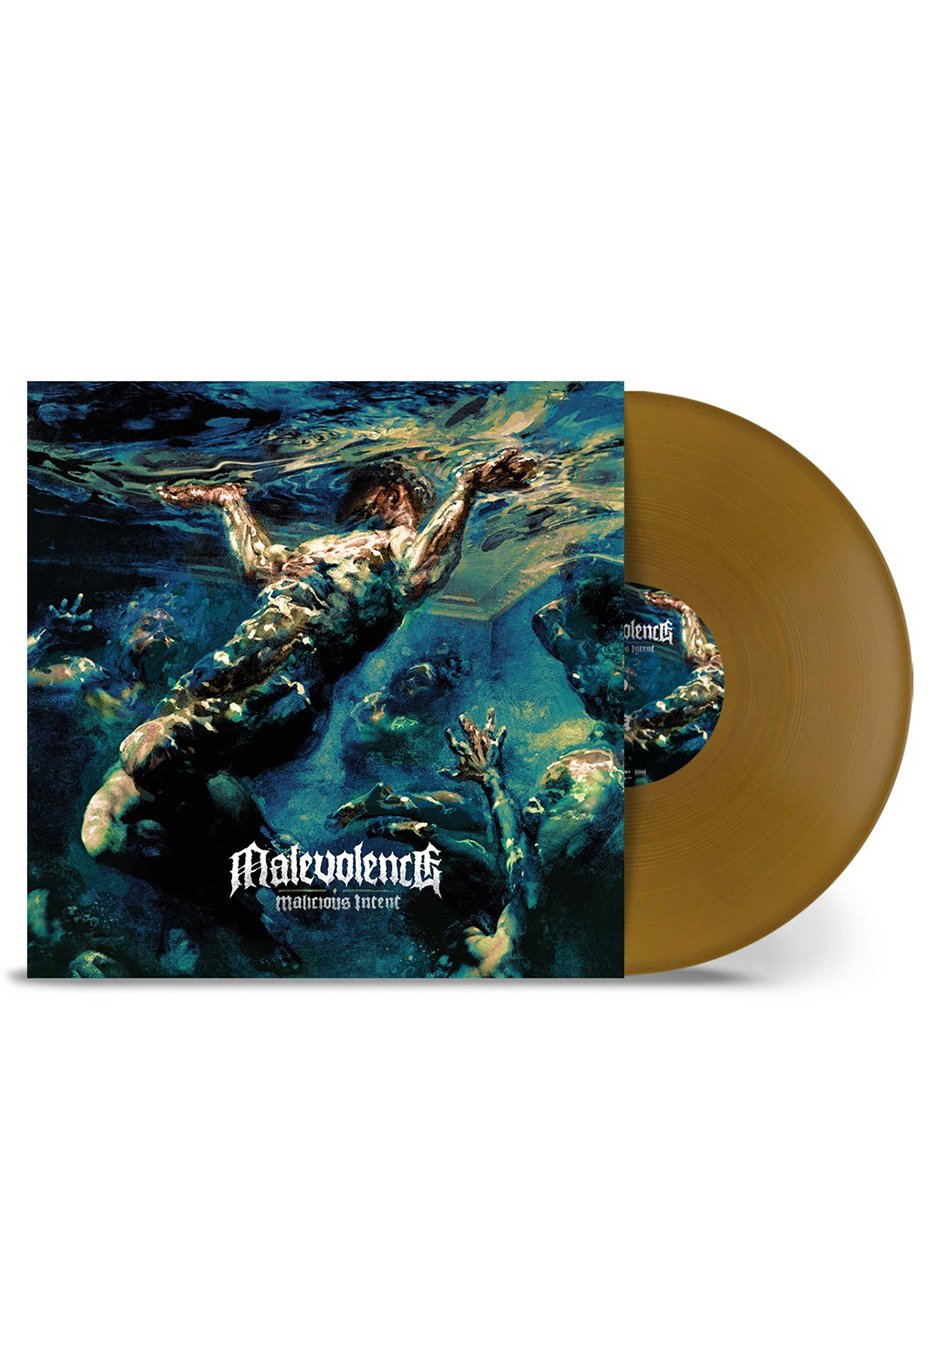 Malevolence - Malicious Intent Gold - Colored Vinyl